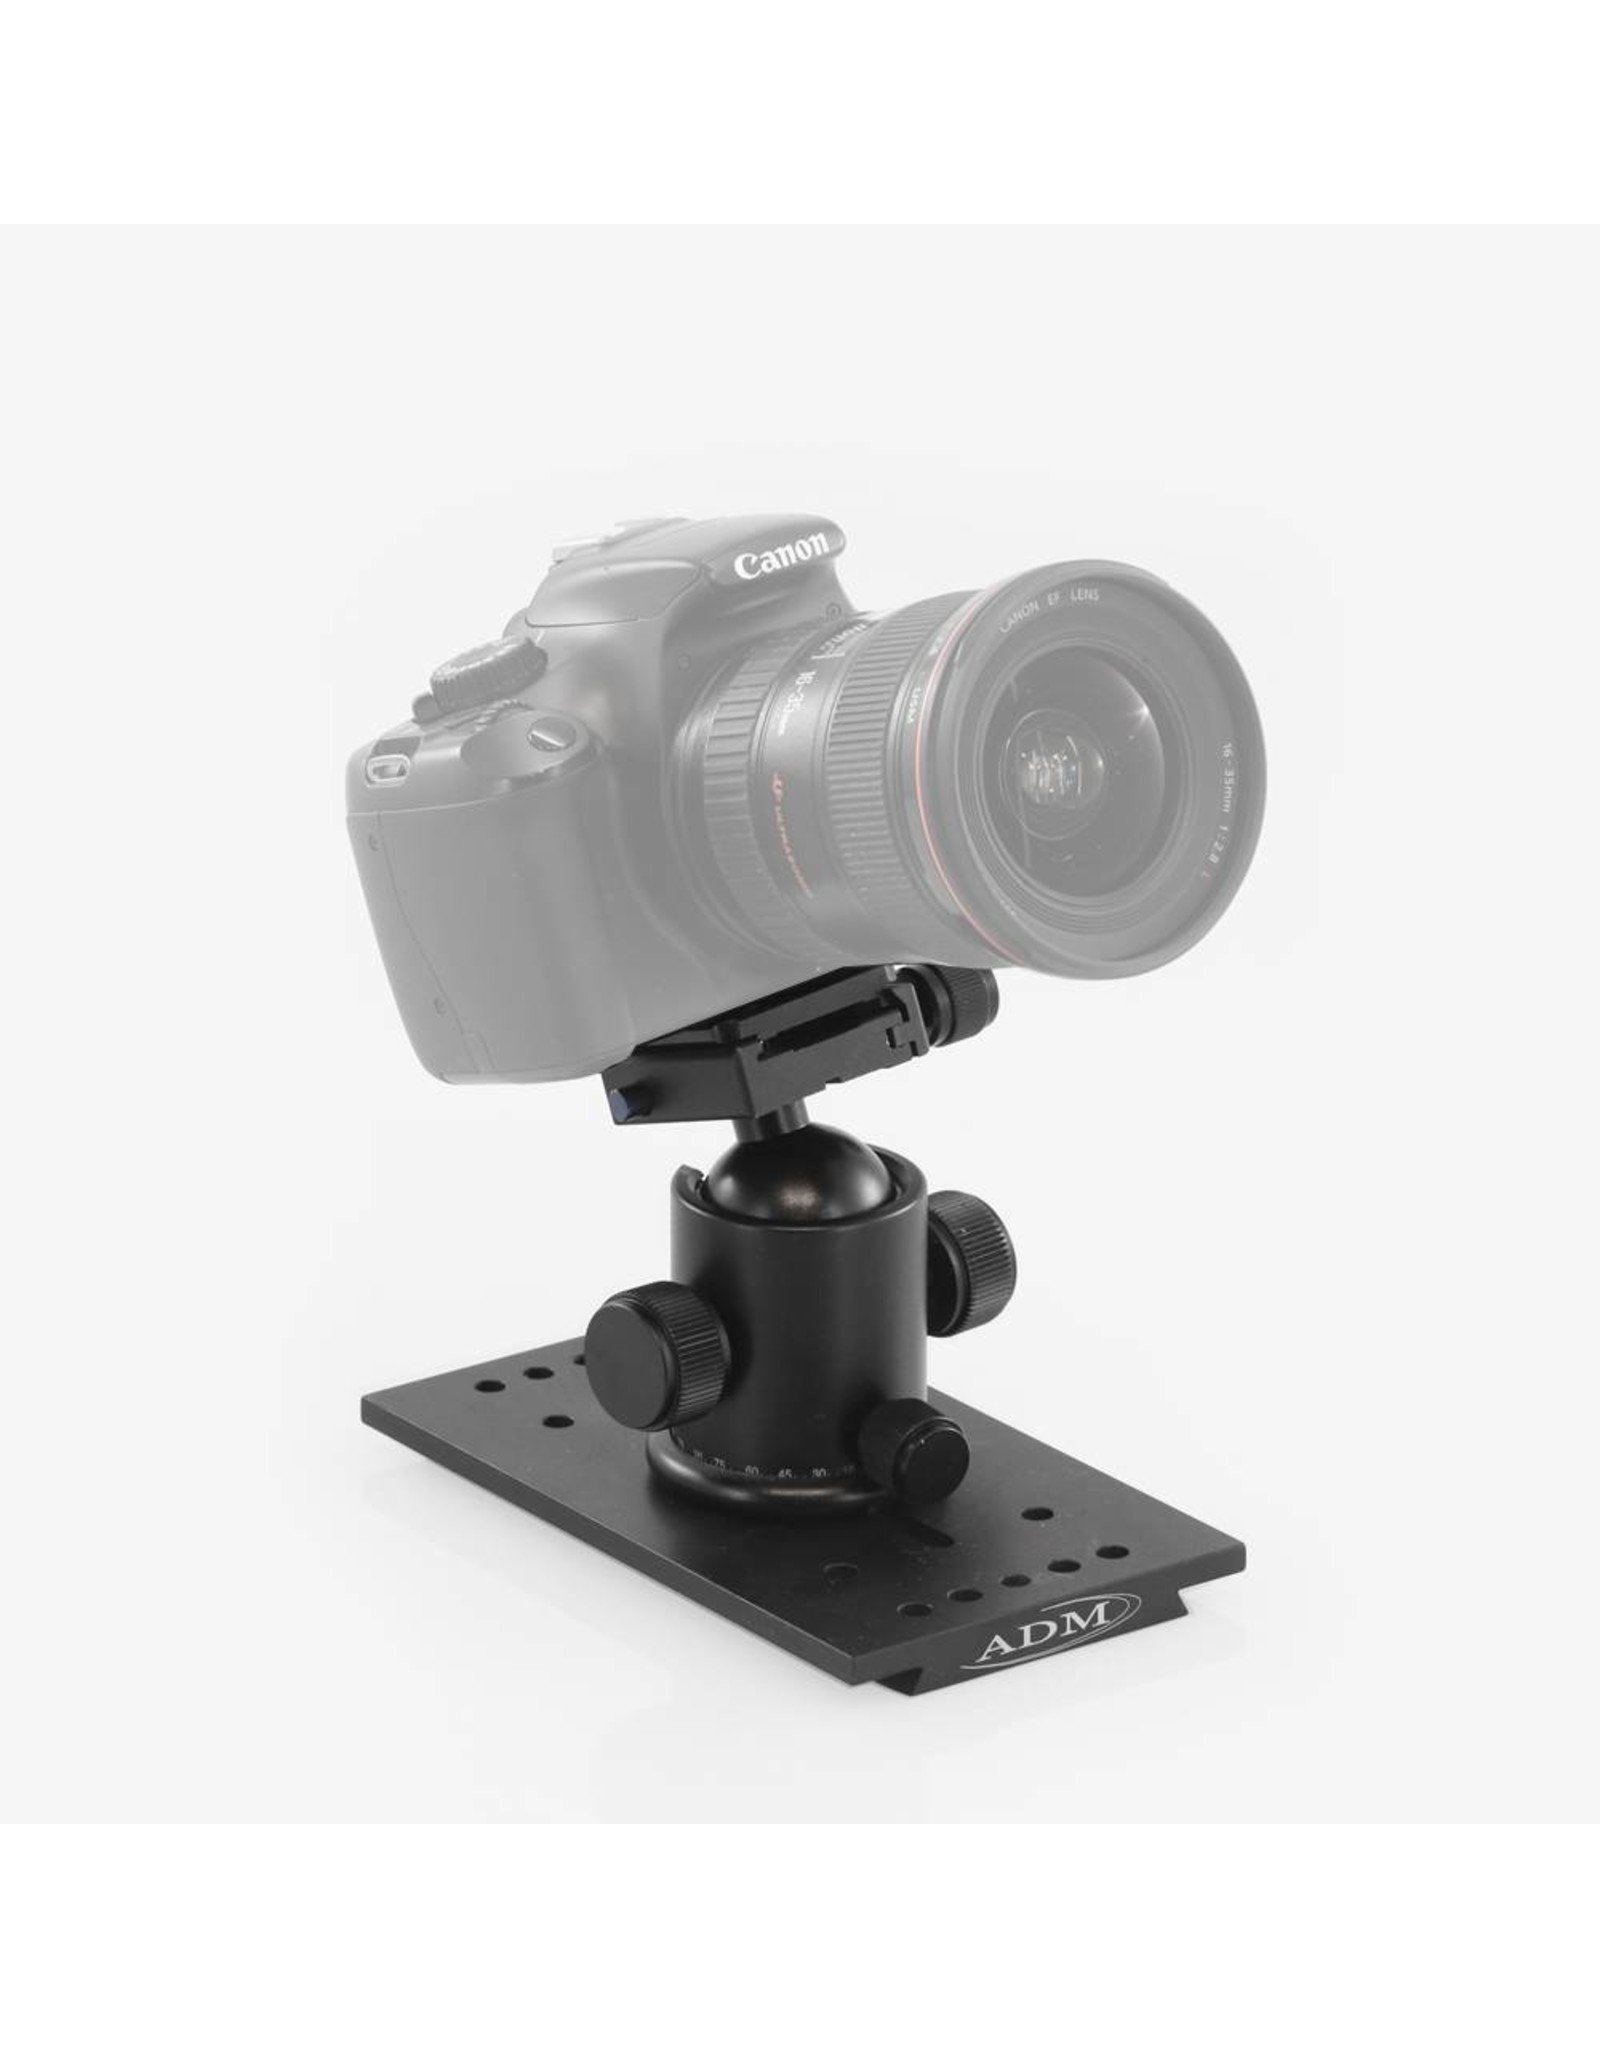 ADM ADM D Series Universal Dovetail Ballhead Camera Mount